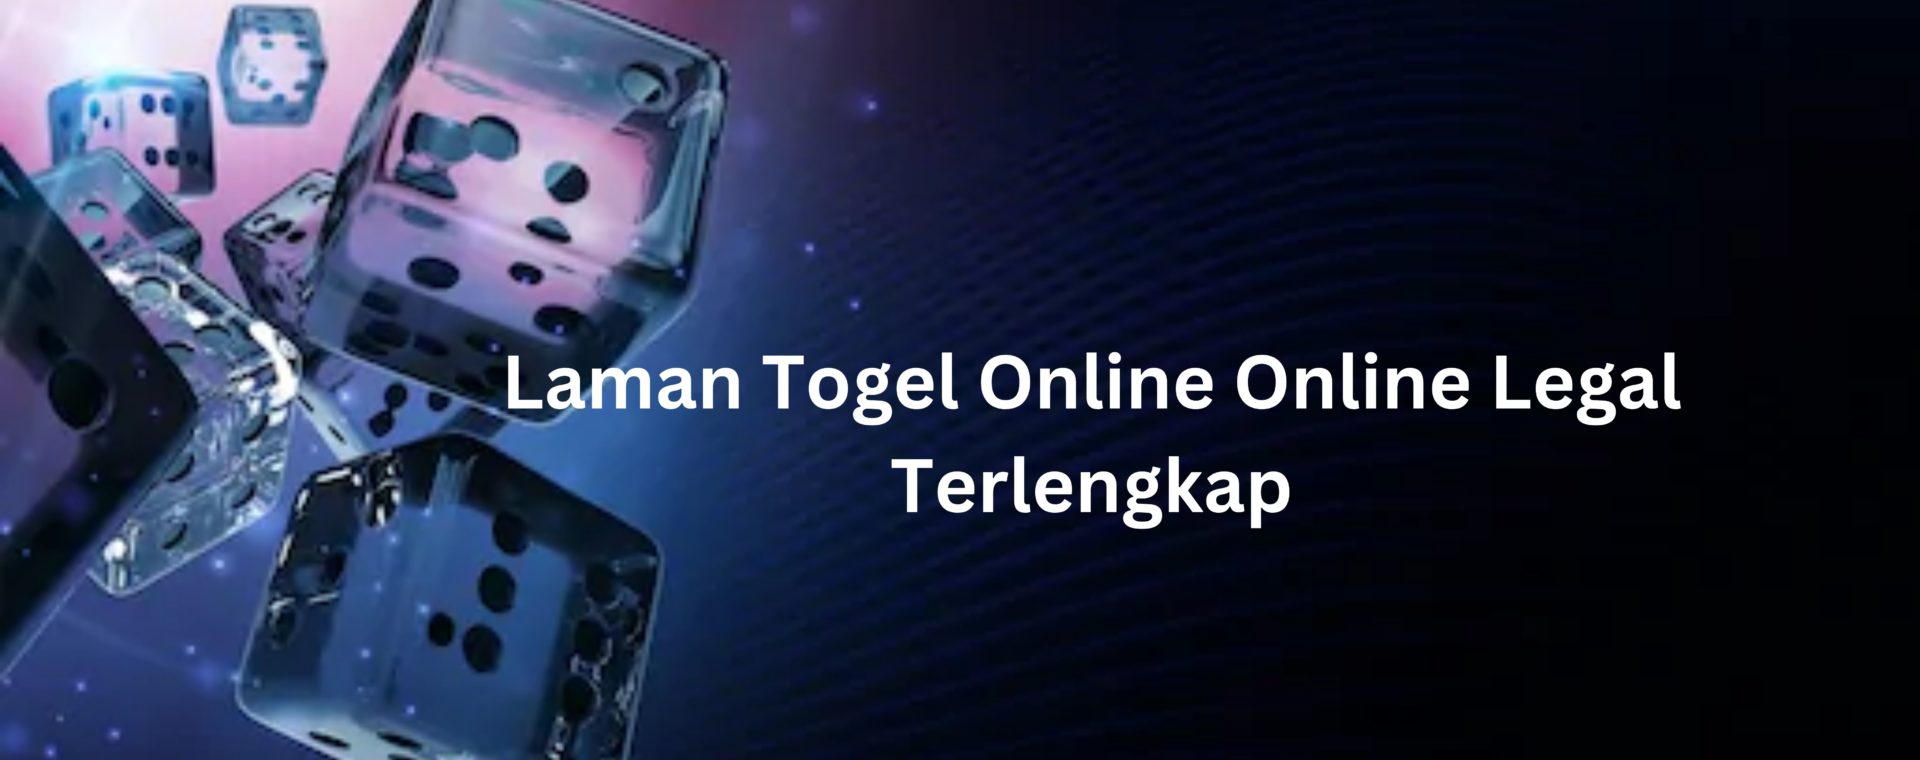 Laman Togel Online Online Legal Terlengkap